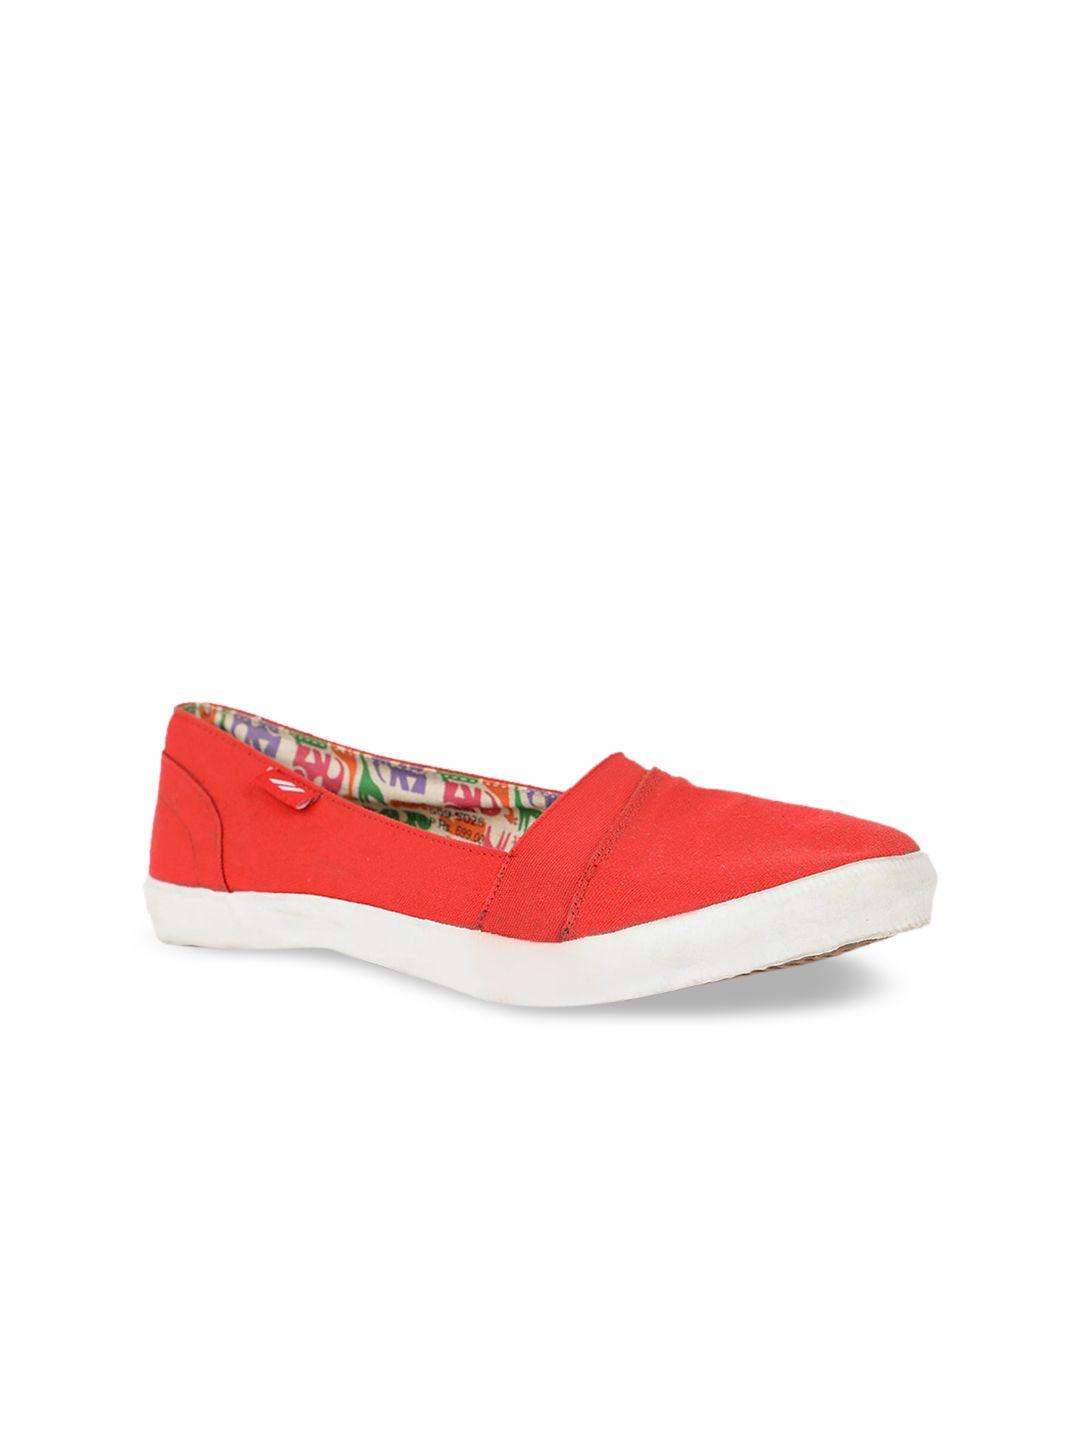 bata-women-red-solid-slip-on-sneakers